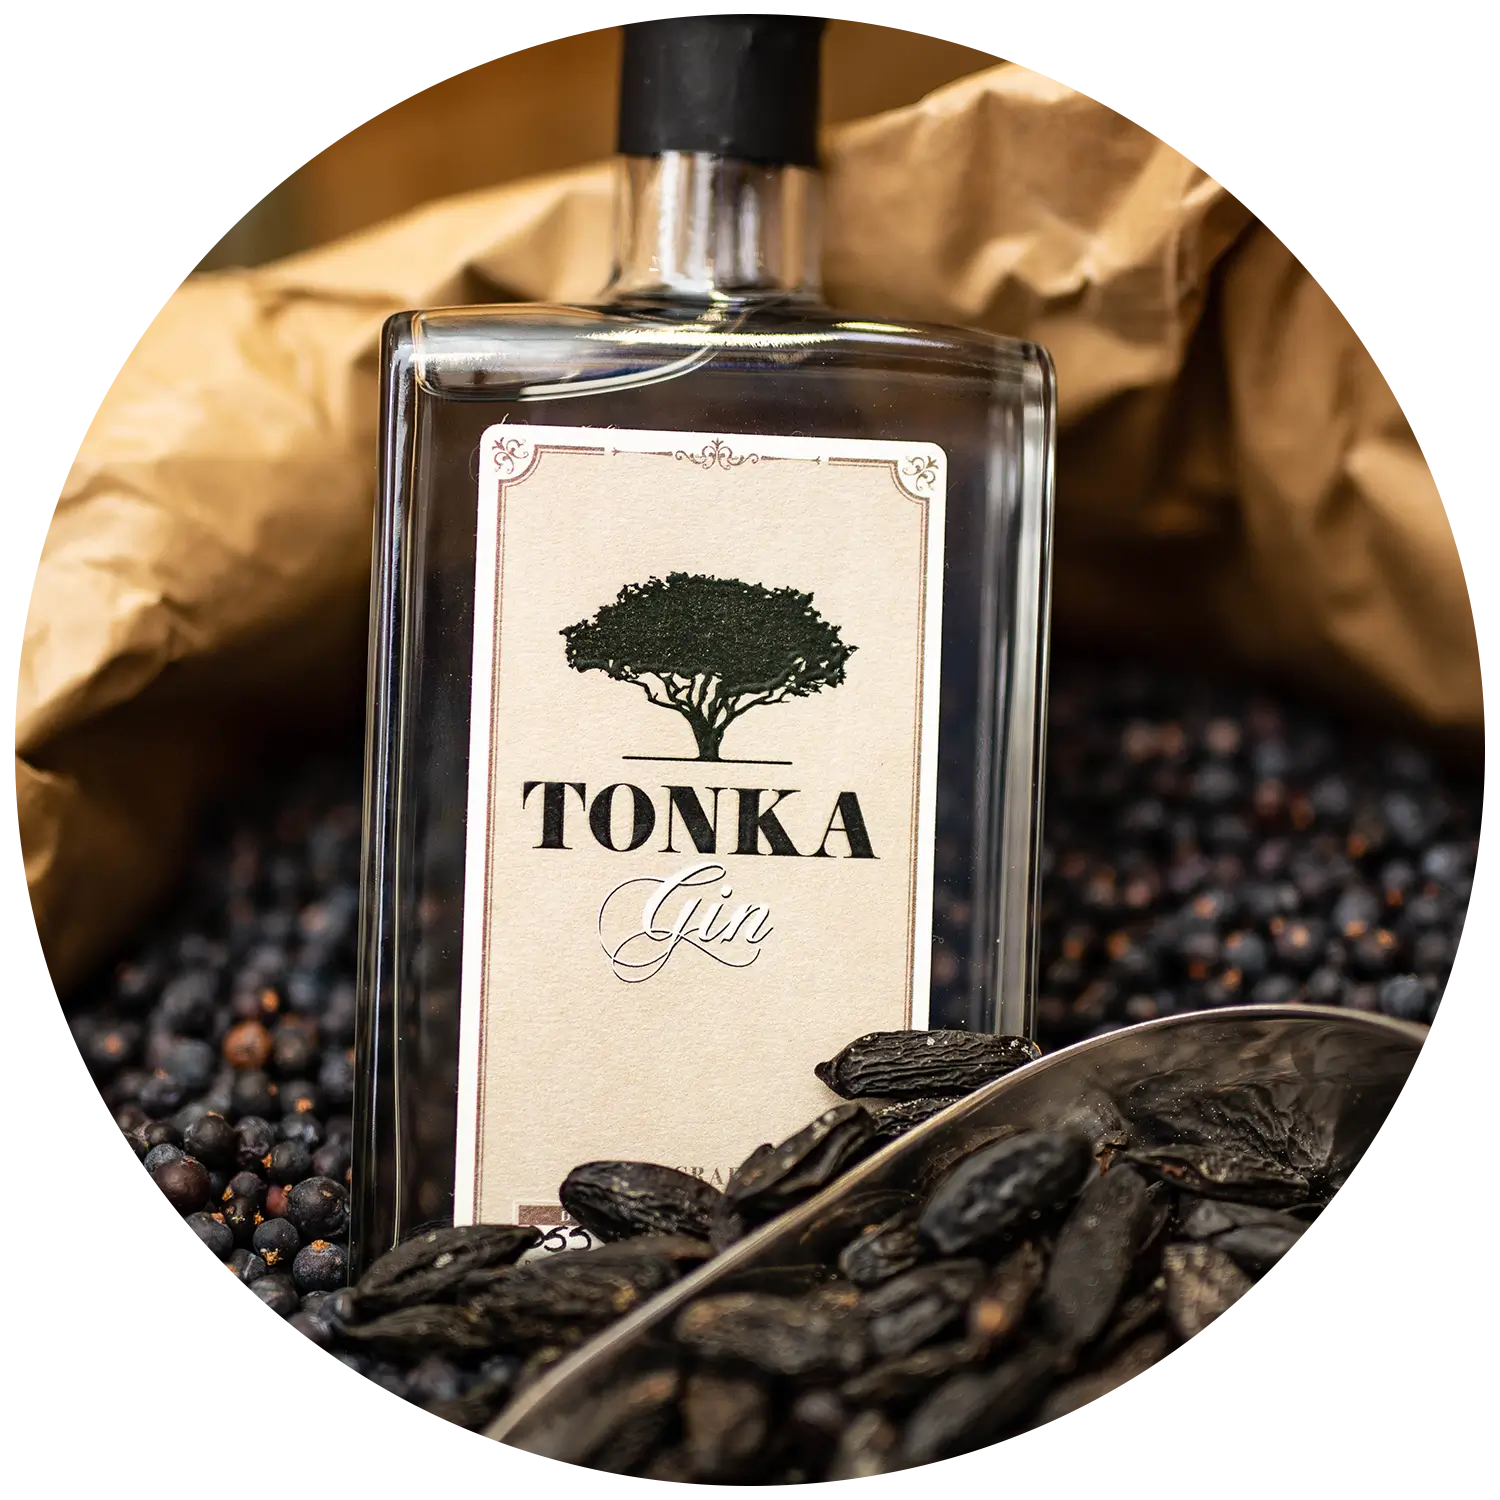 Tonka Gin Classic - meets Vanilla Spirituosenliebhaber – bitter almond